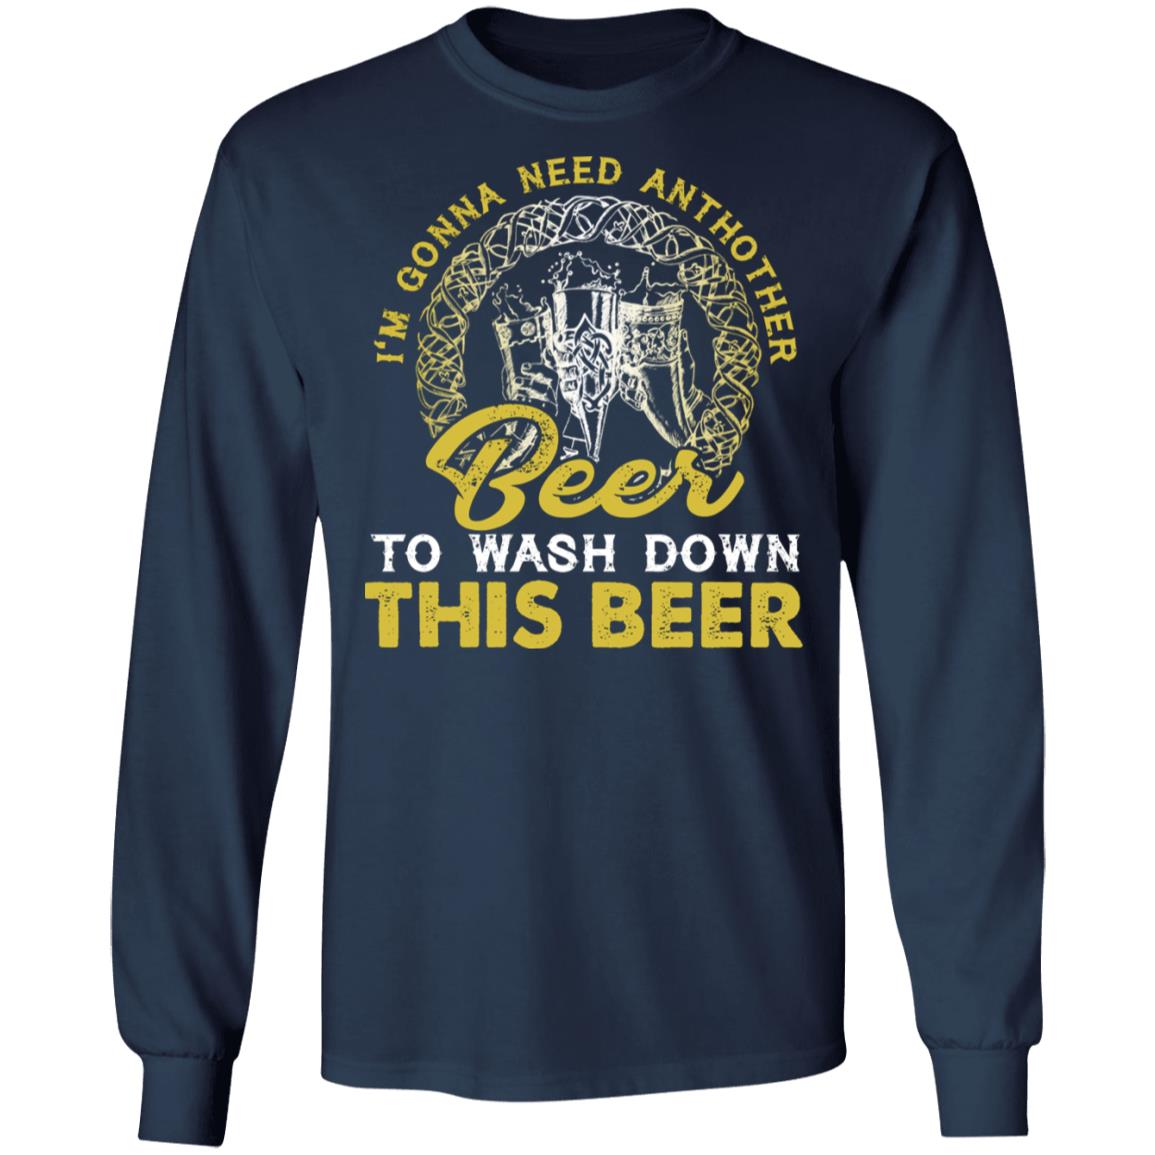 Wash Down This Beer Viking T-shirt, Hoodie, Mug